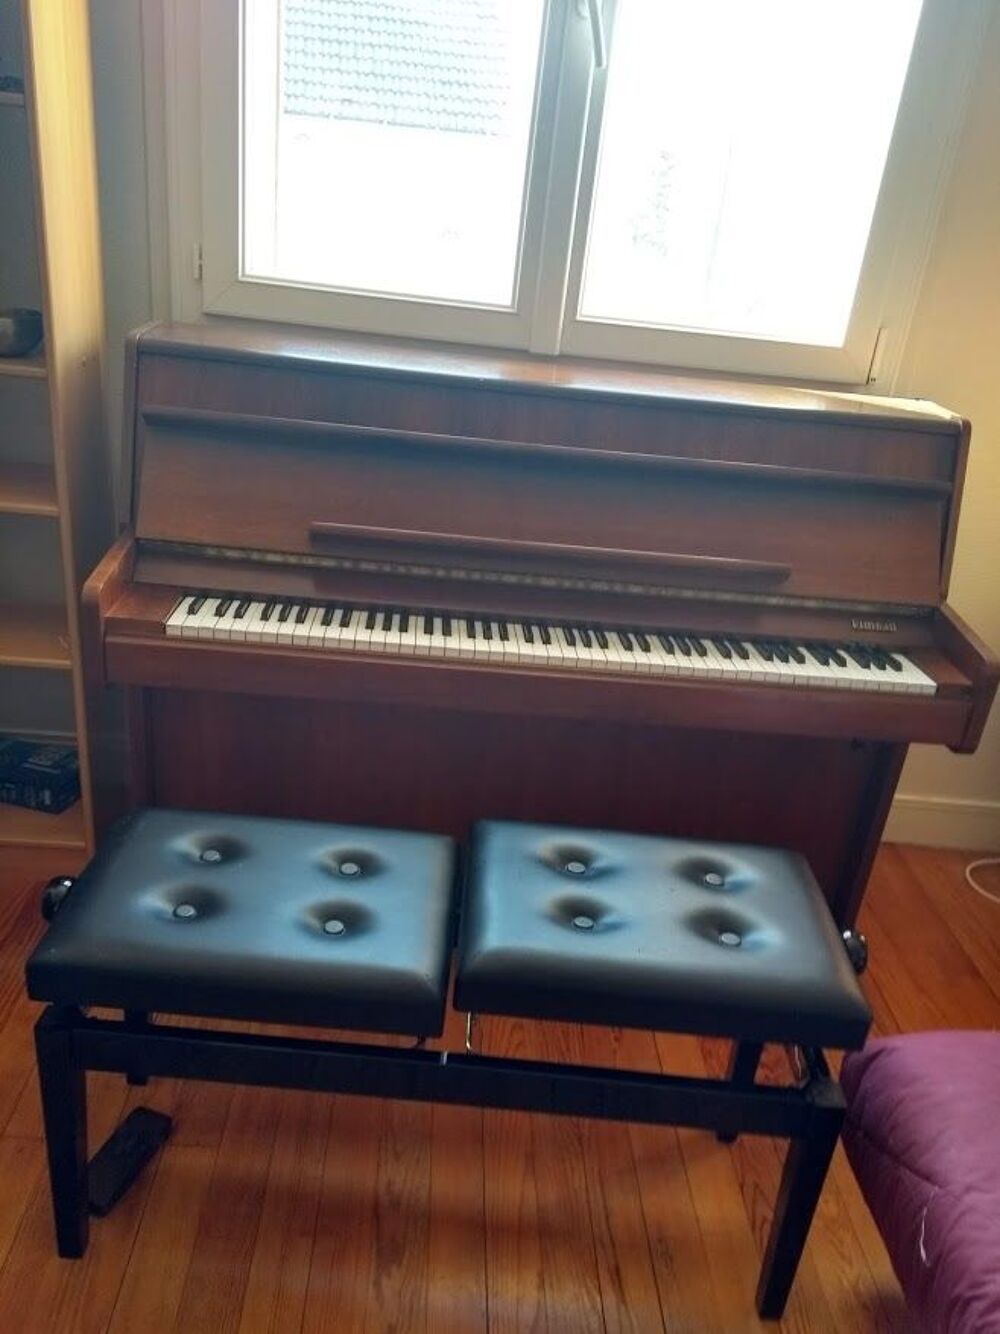 Piano droit Kimball + Assise Instruments de musique